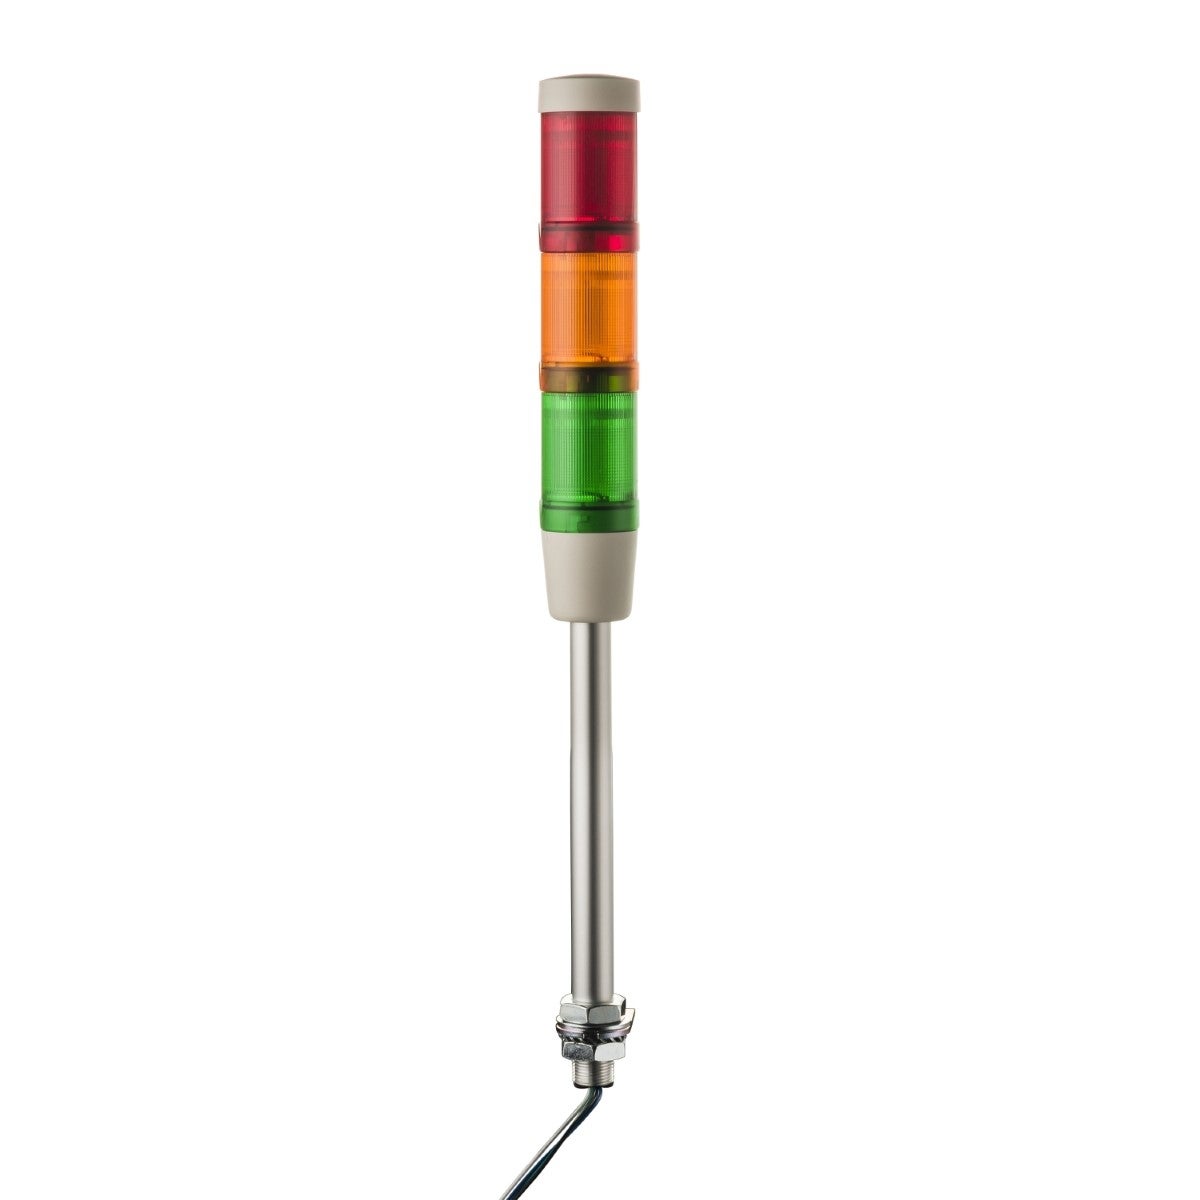 Harmony XVM, Modular tower lights, aluminium, red/orange/green, Ø45, steady, super bright LED, 24 V AC/DC